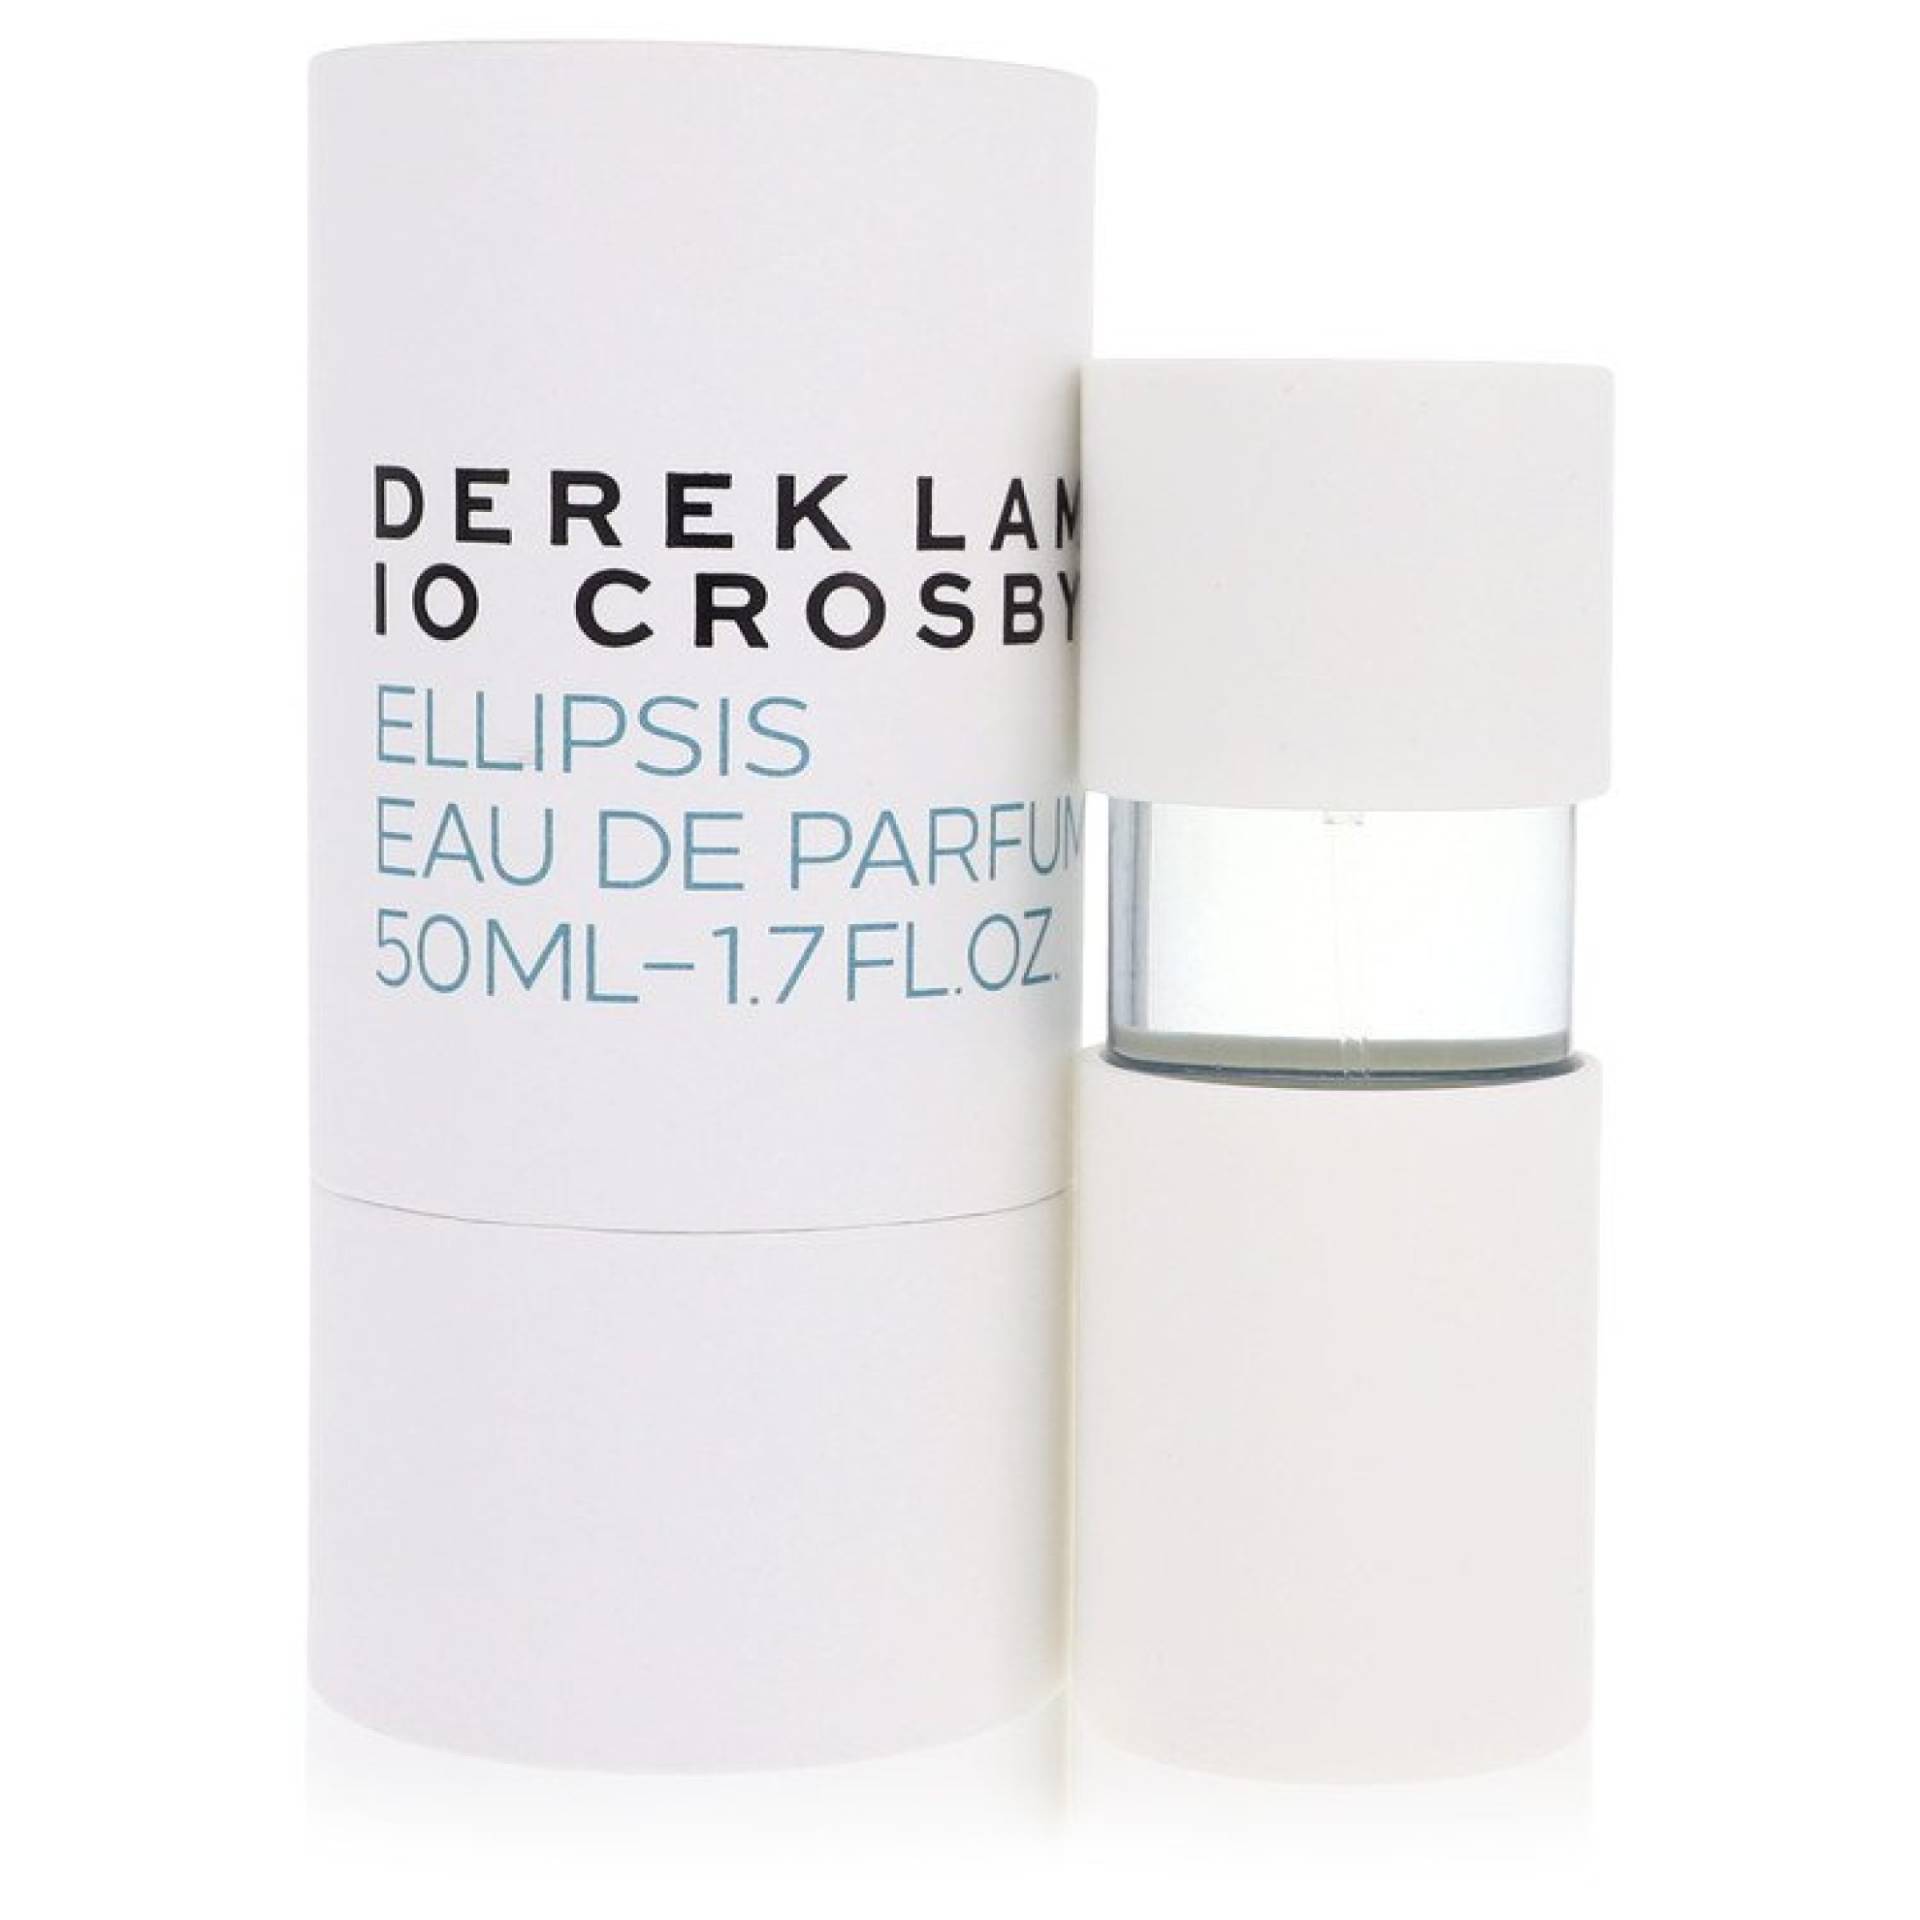 Derek Lam 10 Crosby Ellipsis Eau De Parfum Spray 50 ml